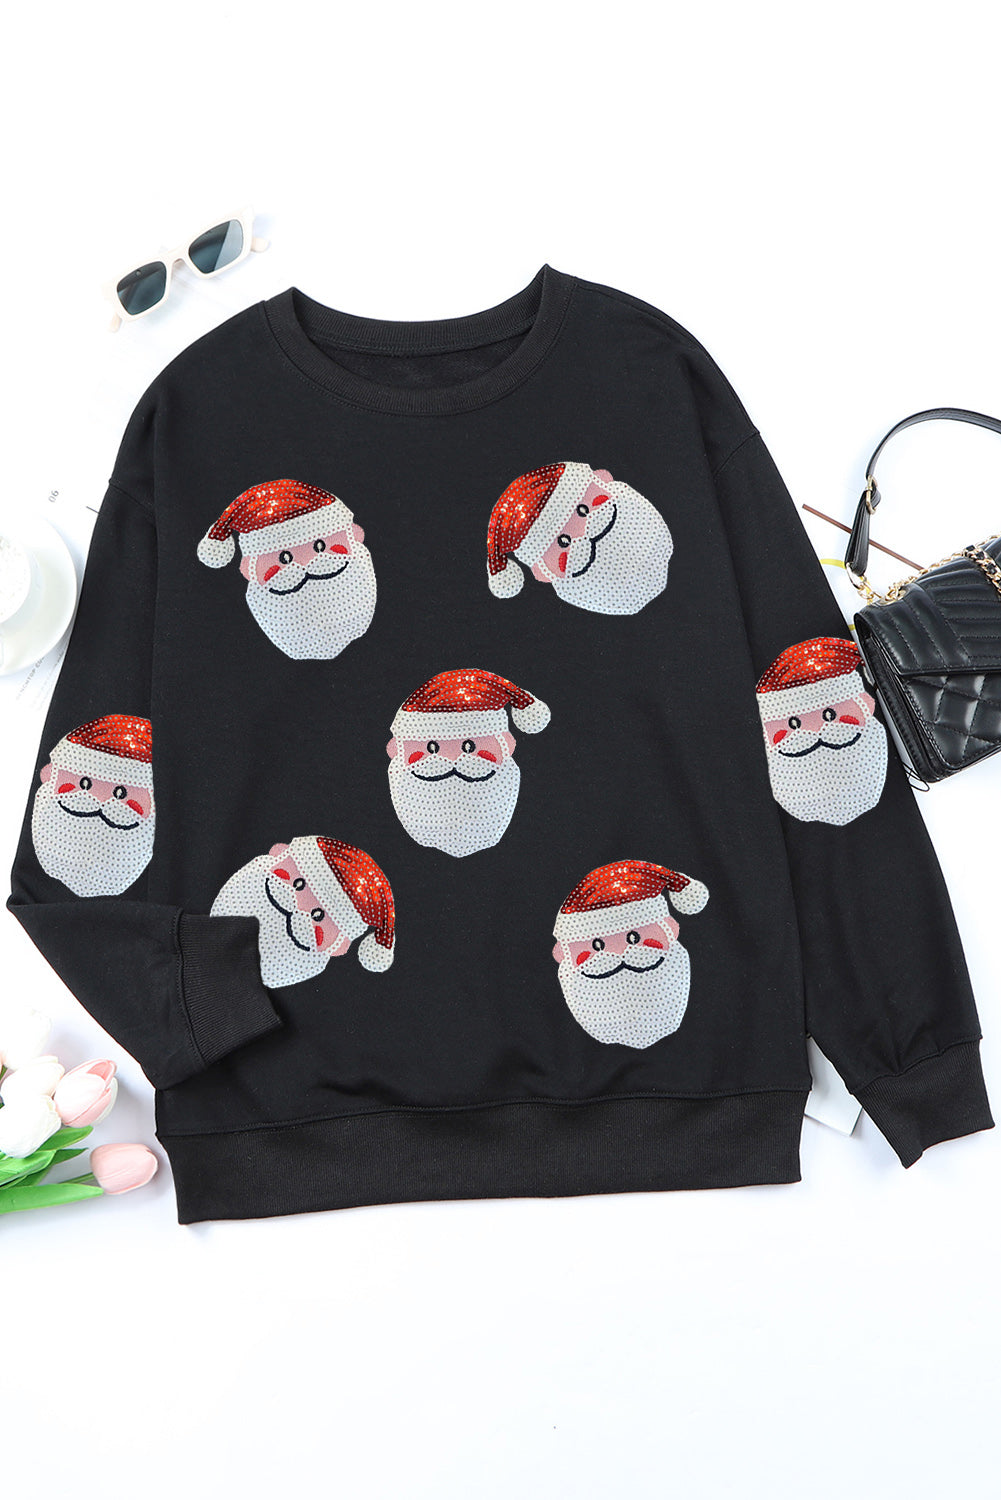 Black Santa Claus Sequin Graphic Sweatshirt Graphic Sweatshirts JT's Designer Fashion